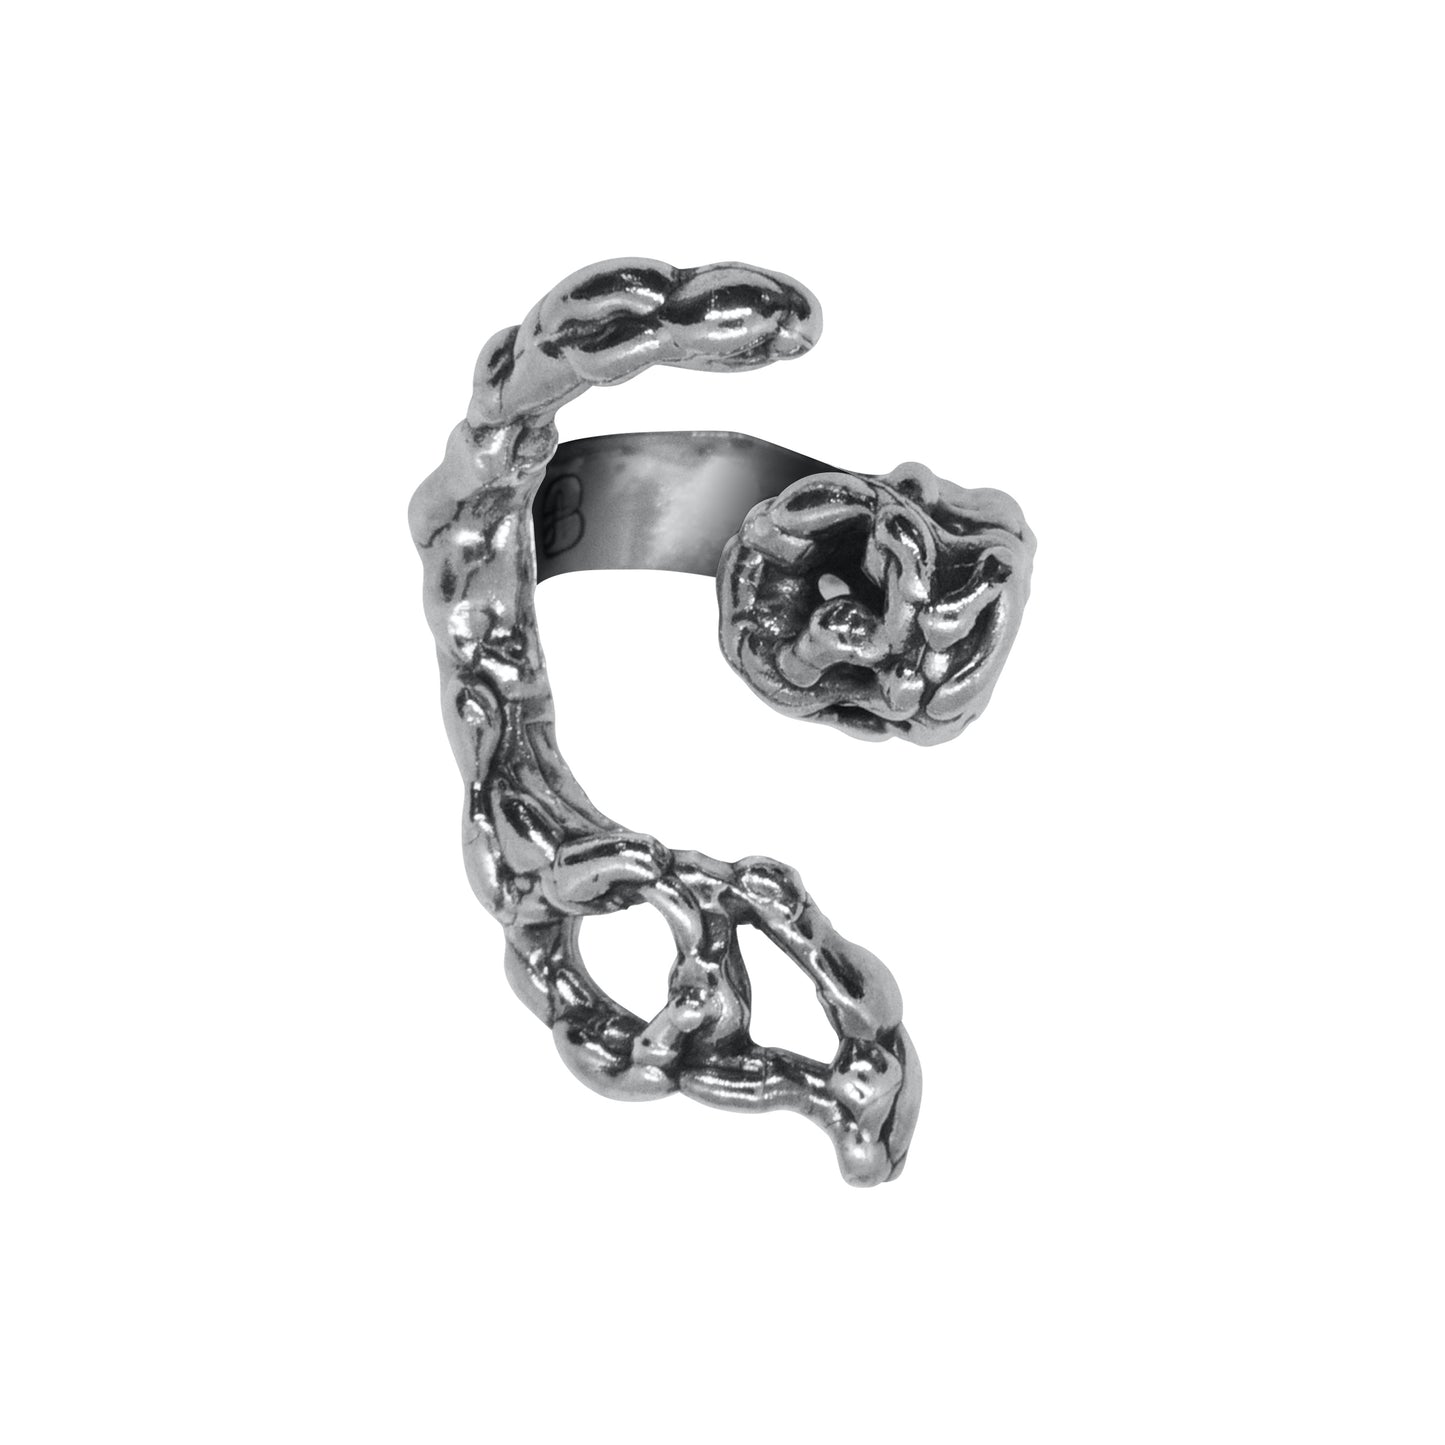 Crescent Ring - Spiritual Ring - Designer Jewelry - Organic Shape Ring - Sterling Silver Ring - Positive Ring - Inspiring Ring